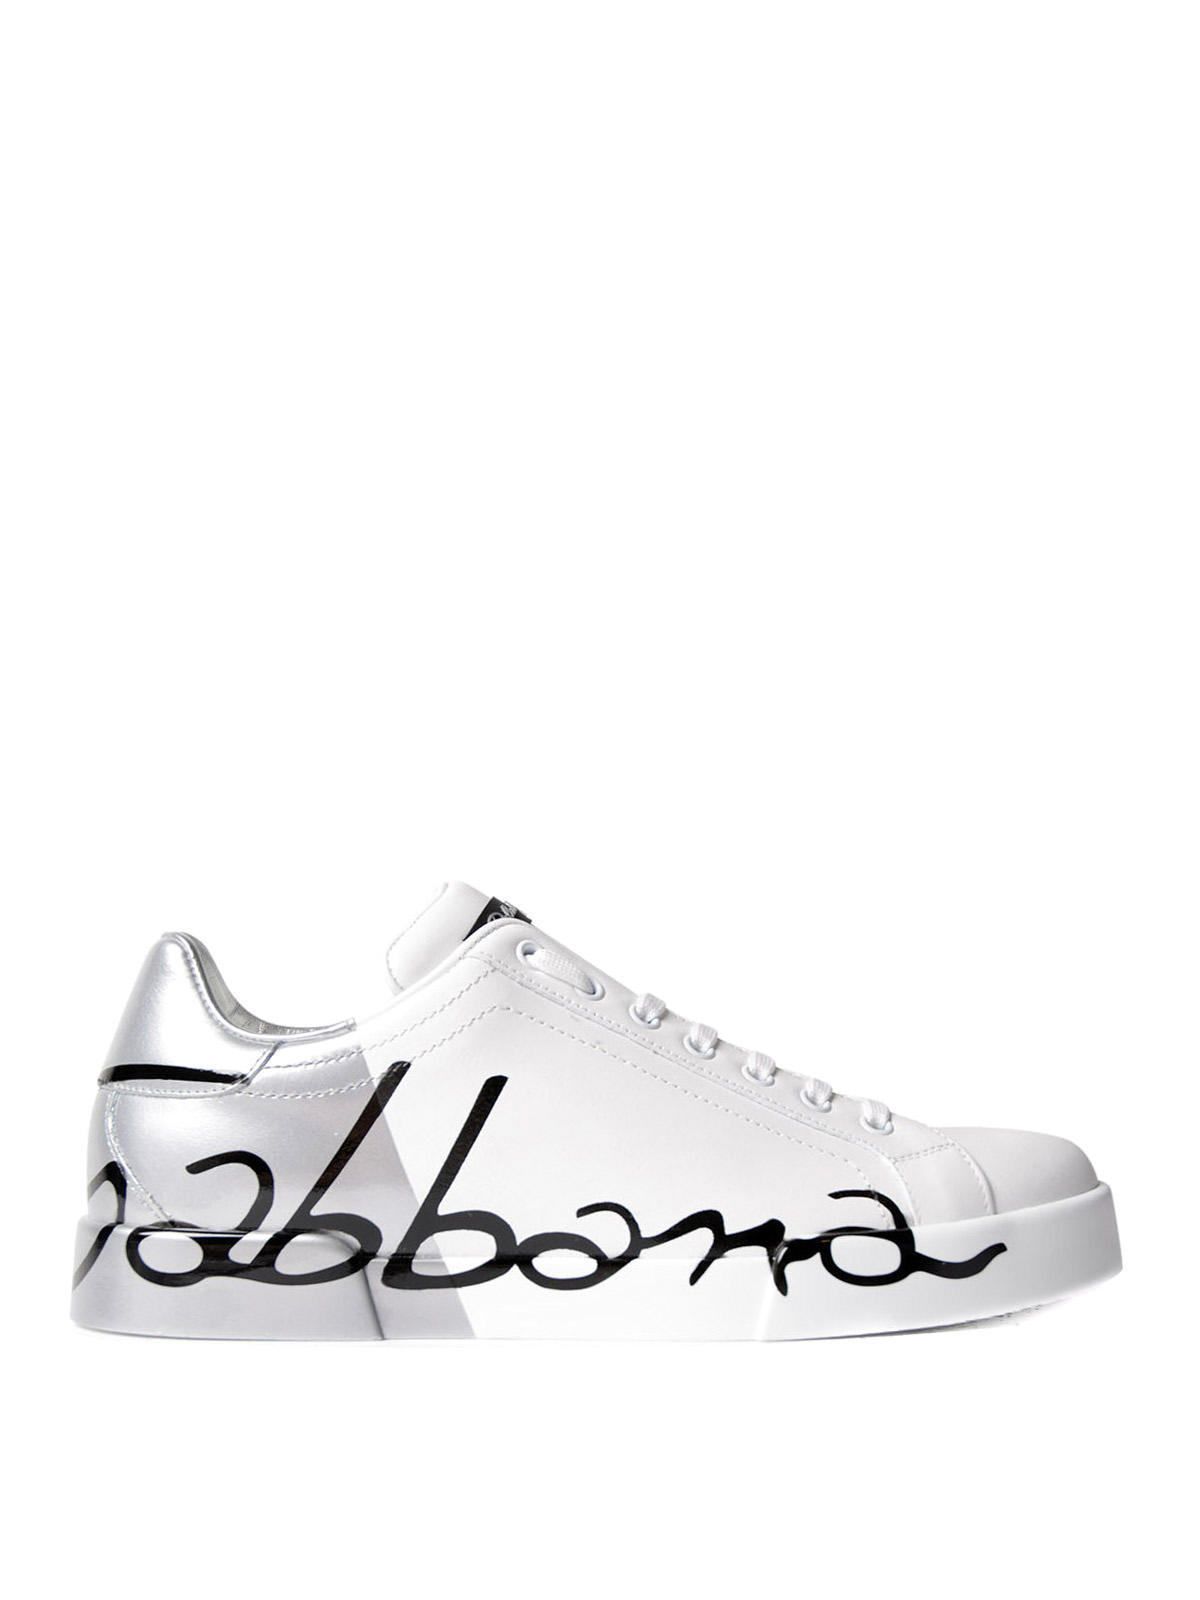 dolce gabbana silver shoes